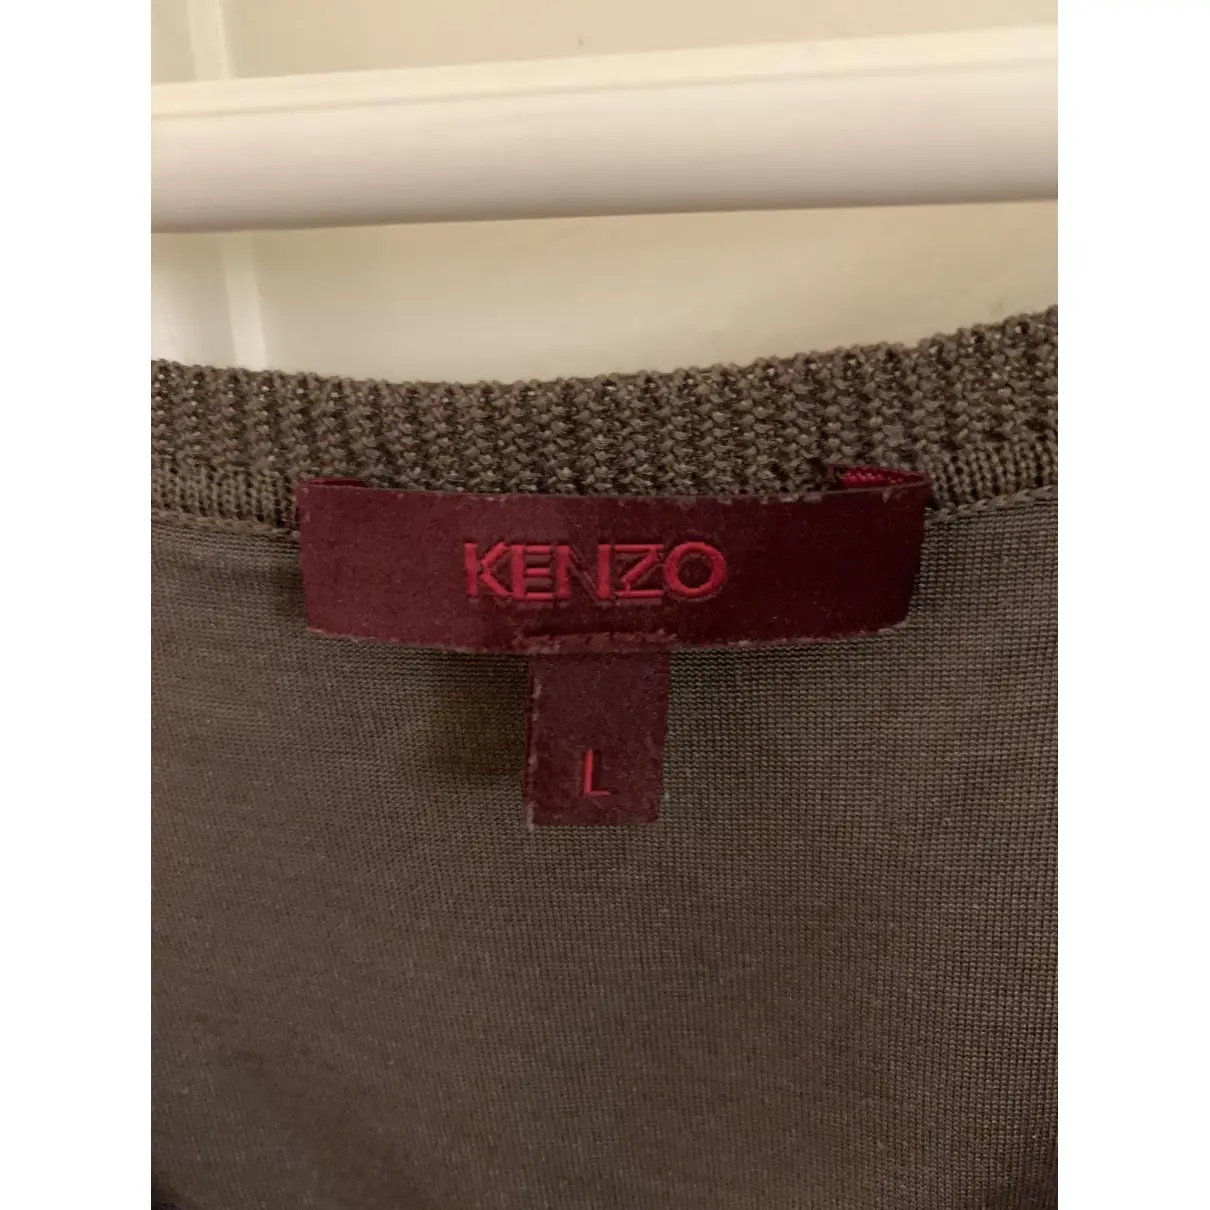 Buy Kenzo Silk blouse online